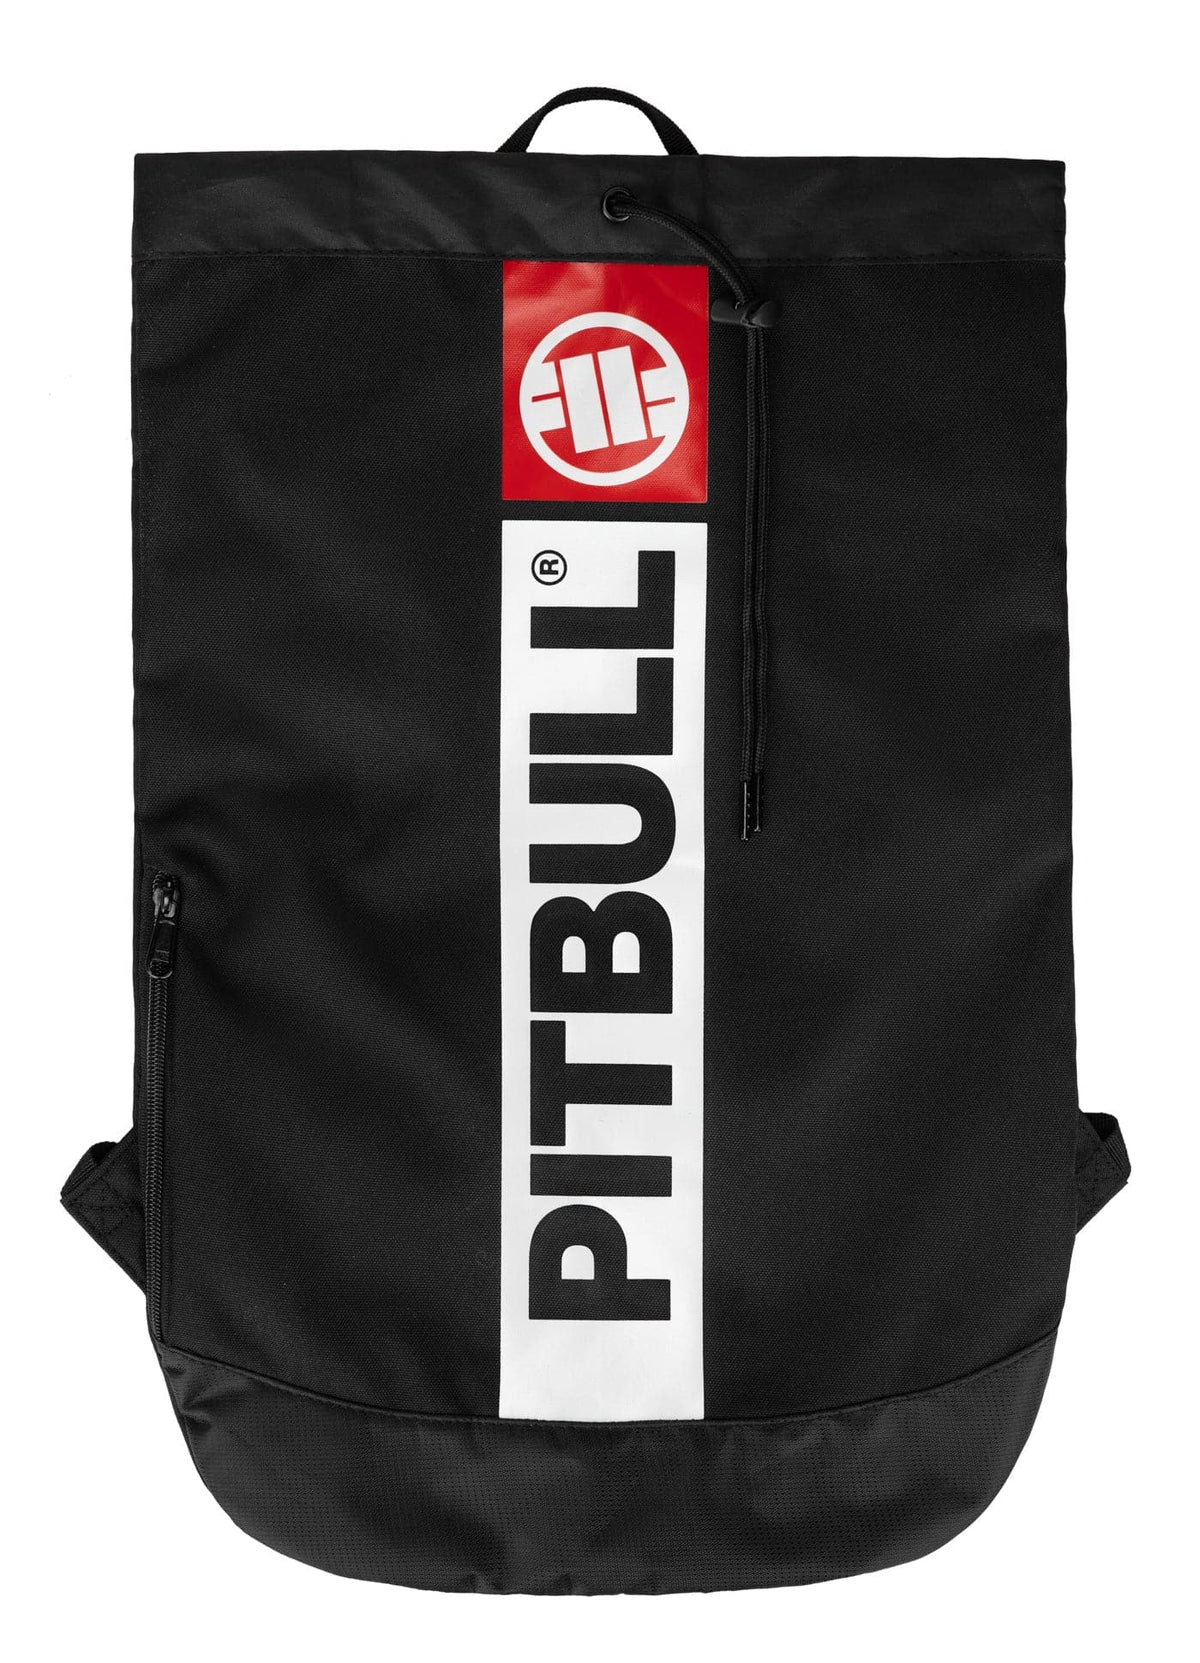 Hilltop Black/White Gym Sack Bag